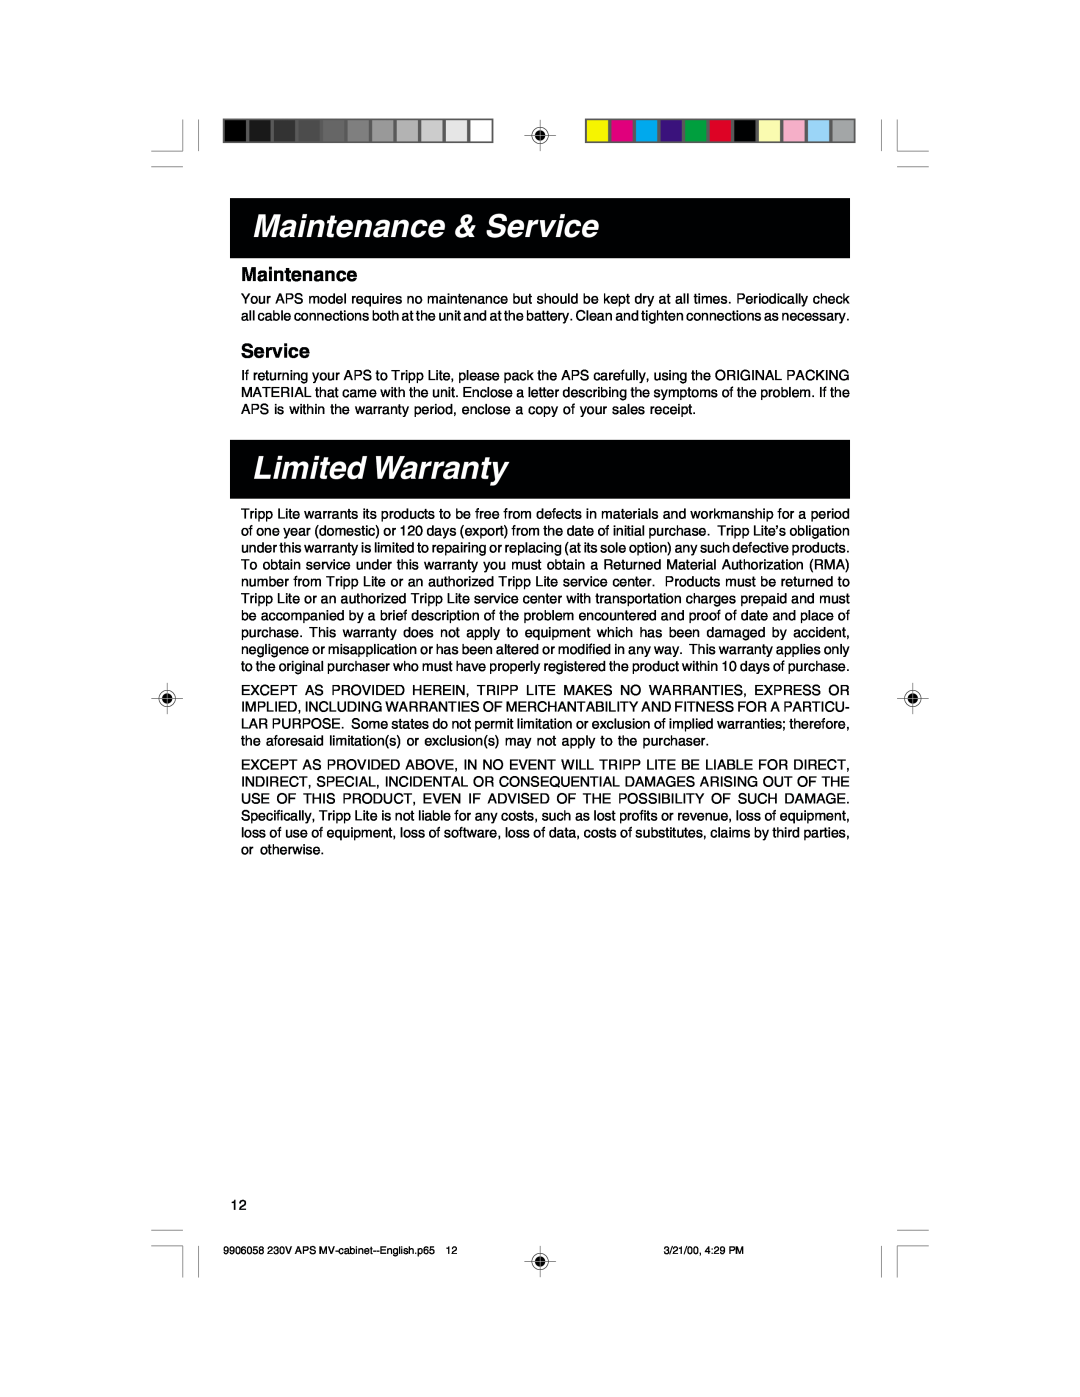 Tripp Lite APS2012INT, APS1024INT, APS2424INT owner manual Maintenance & Service, Limited Warranty 